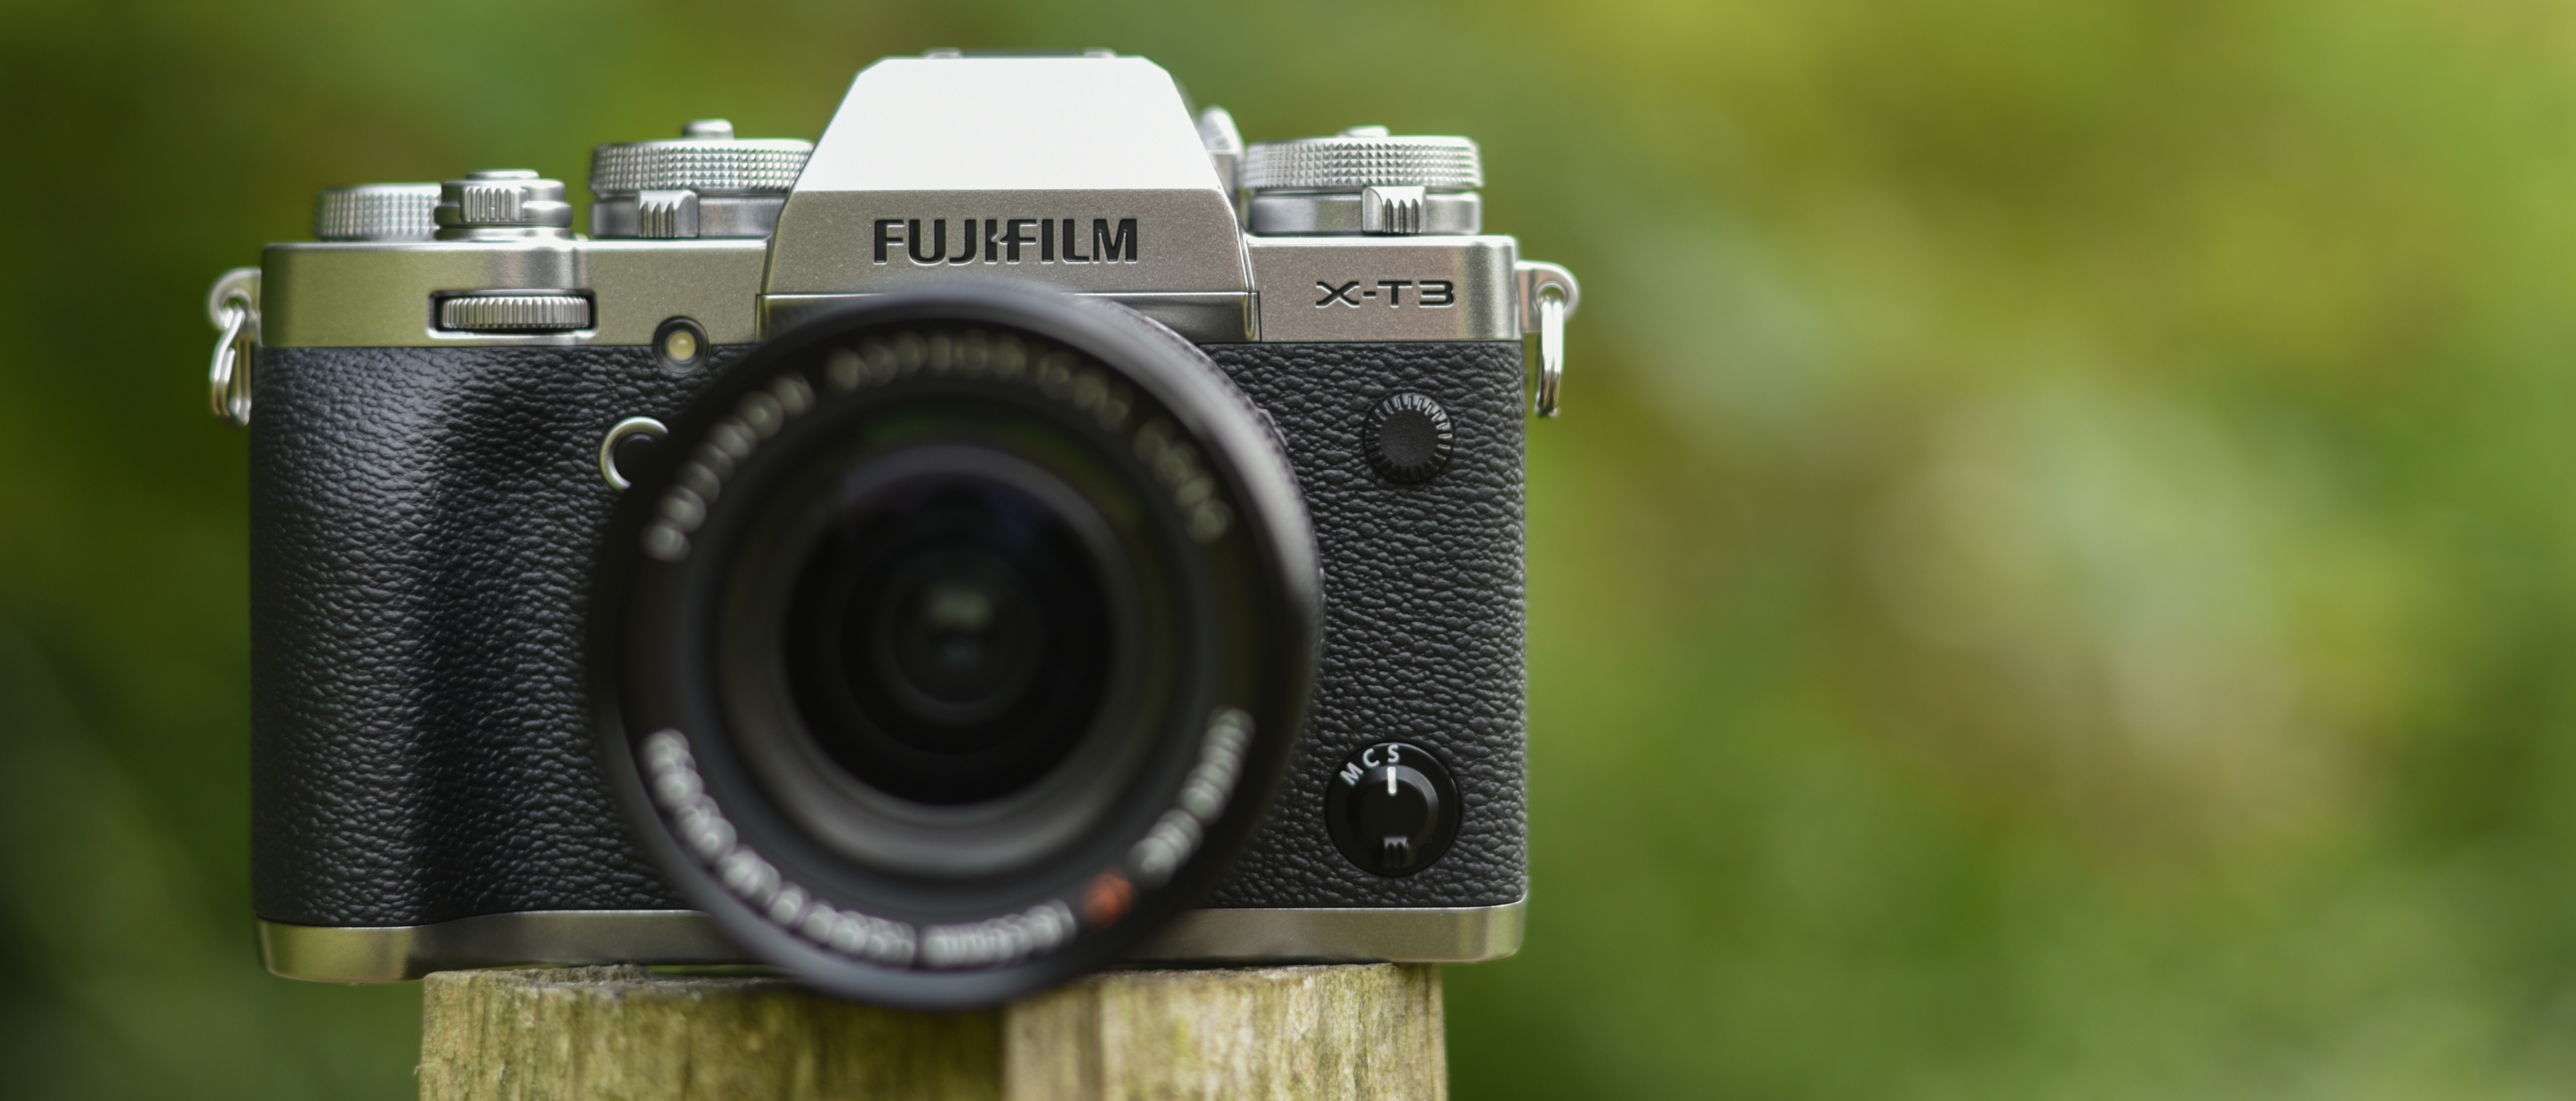 Fujifilm X-T3 review | TechRadar